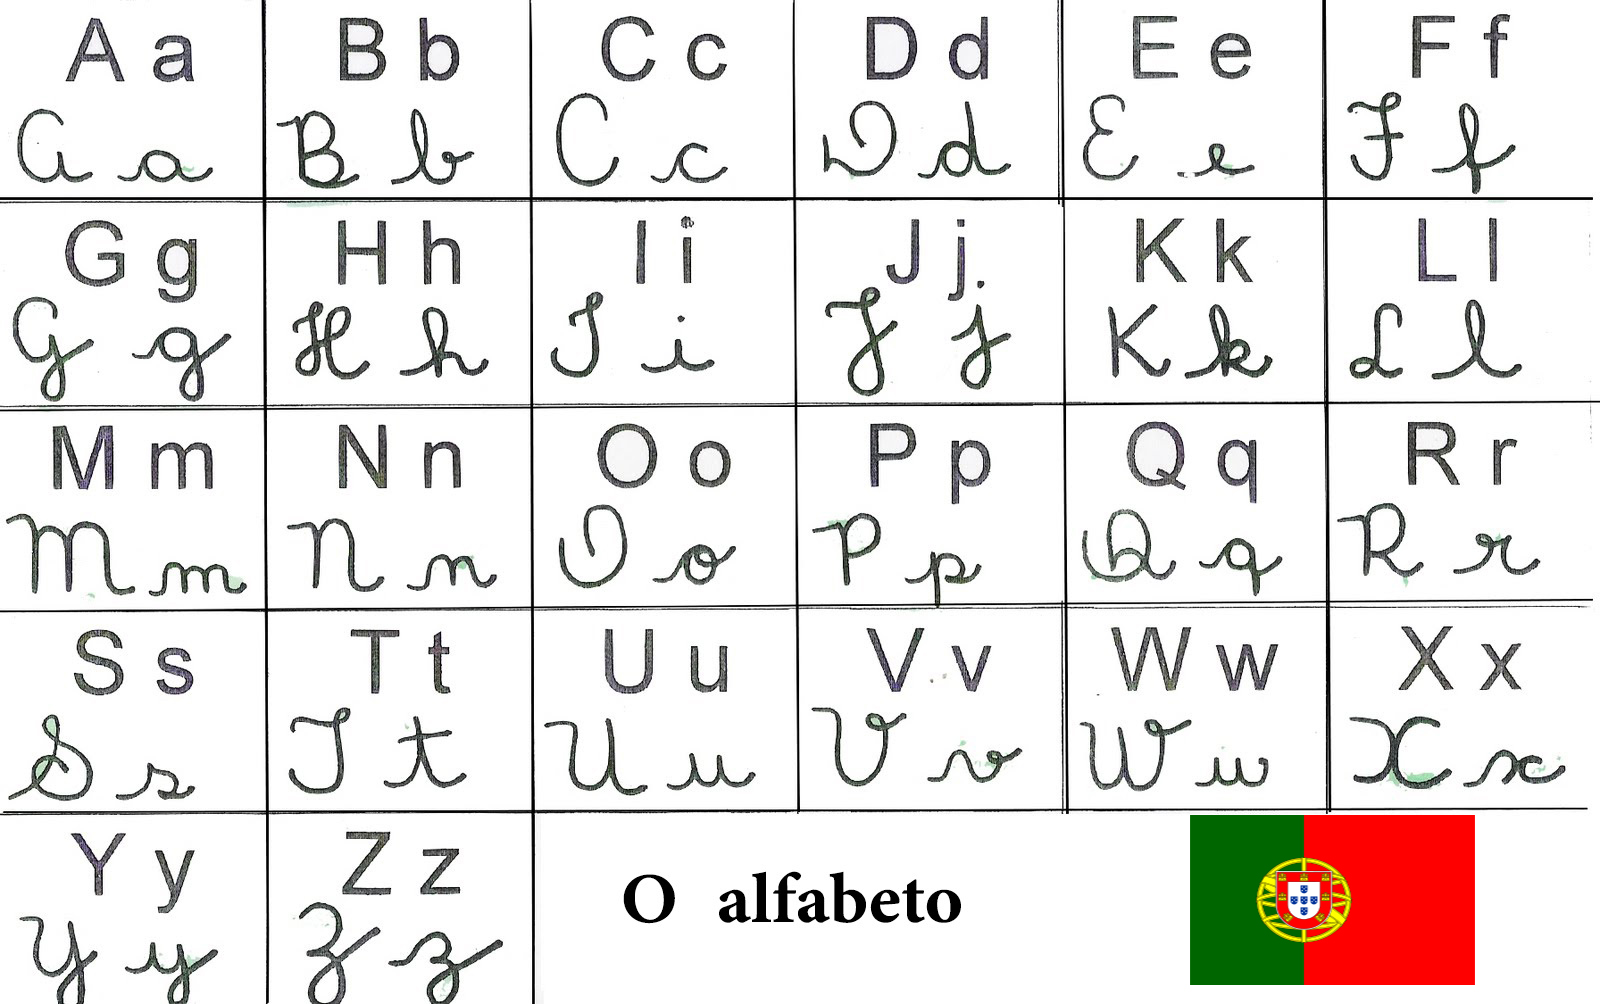 Actividades-para-aprender-o-alfabeto-manuscrito-10-1.jpg